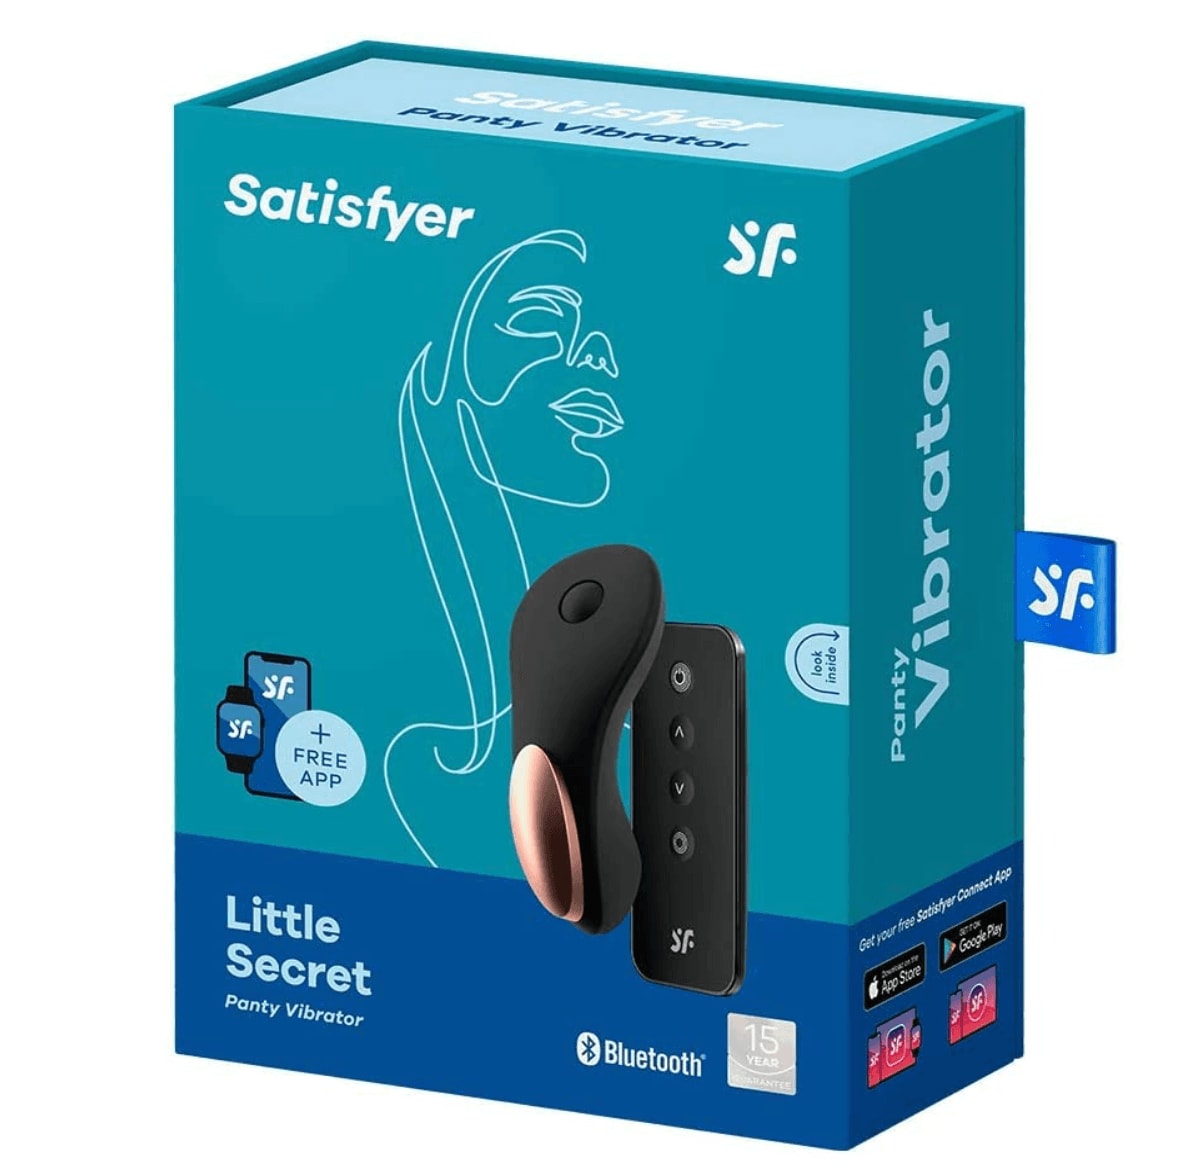 Image of the Satisfyer Satisfyer Little Secret Panty Vibrator - Black product box